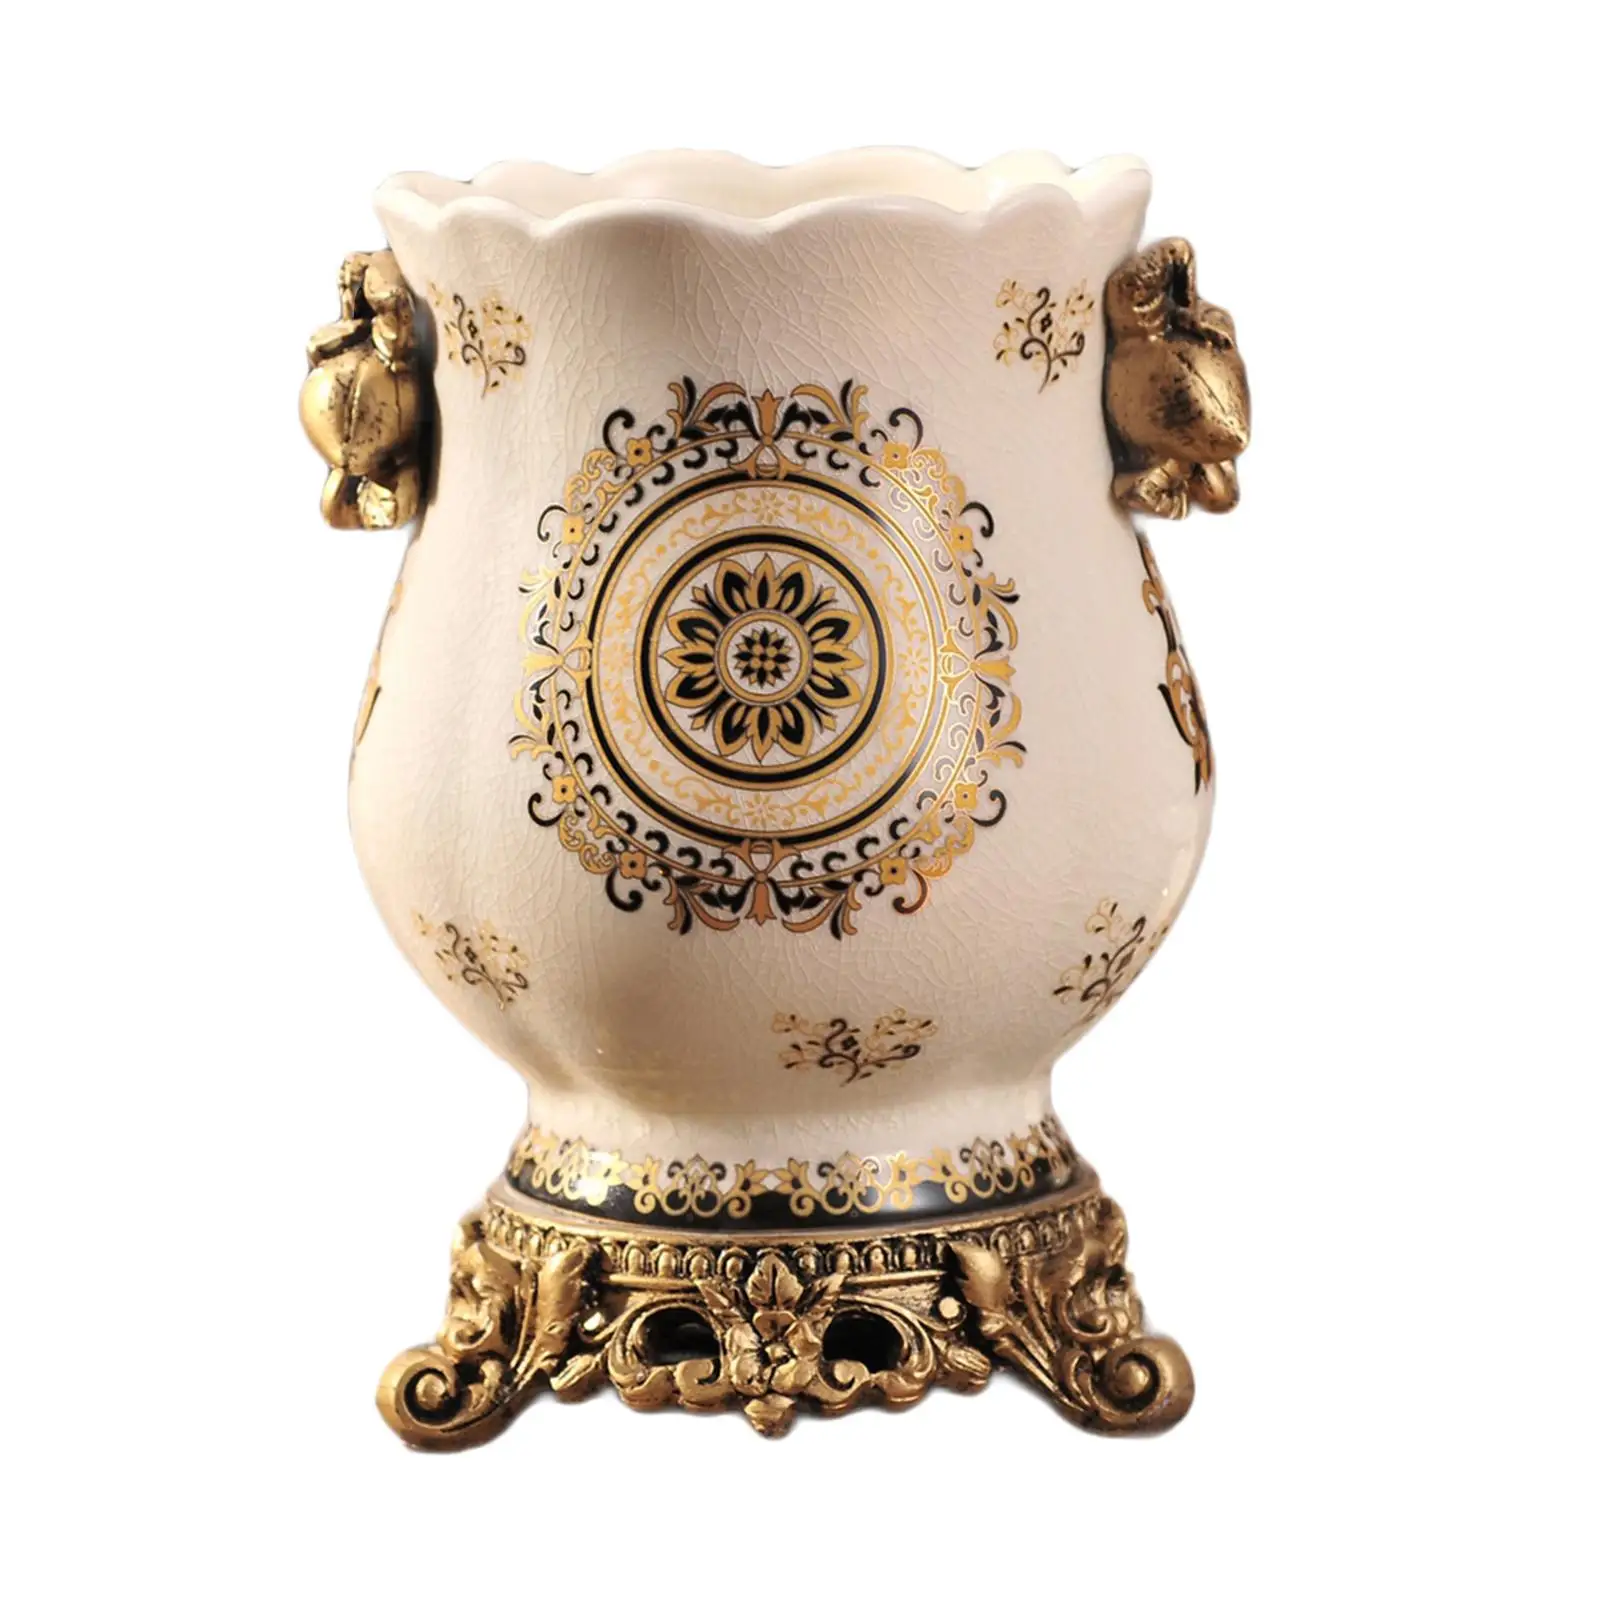 Chinese Style Vase Flower Arrangement Elegant Art Crafts Handicraft Flowerpot for Home Tabletop Ornaments